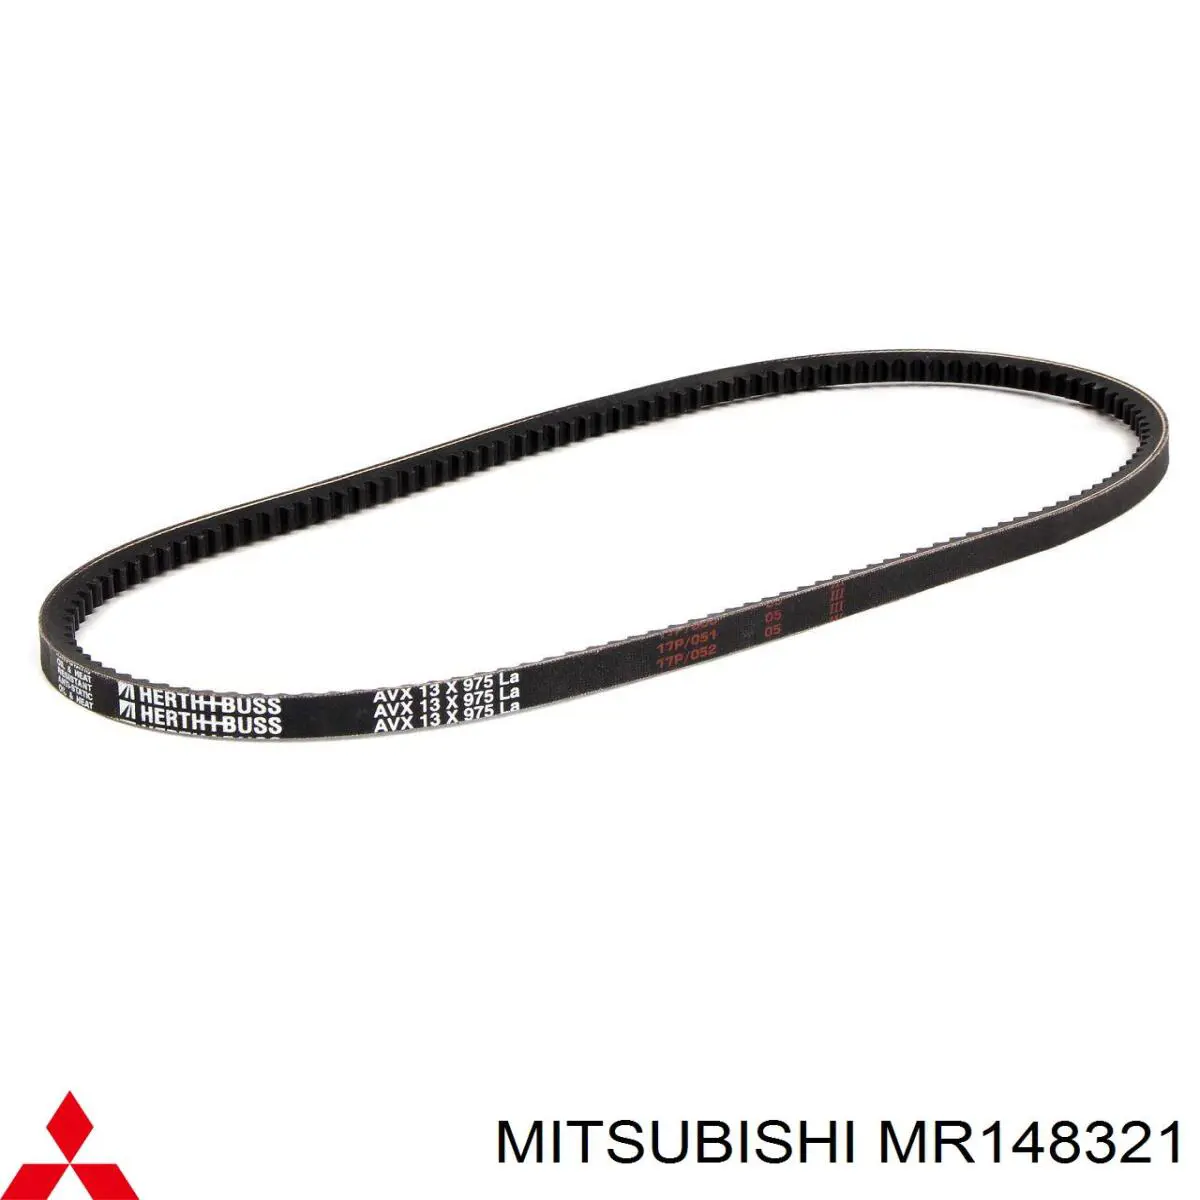 MR148321 Mitsubishi ремень генератора